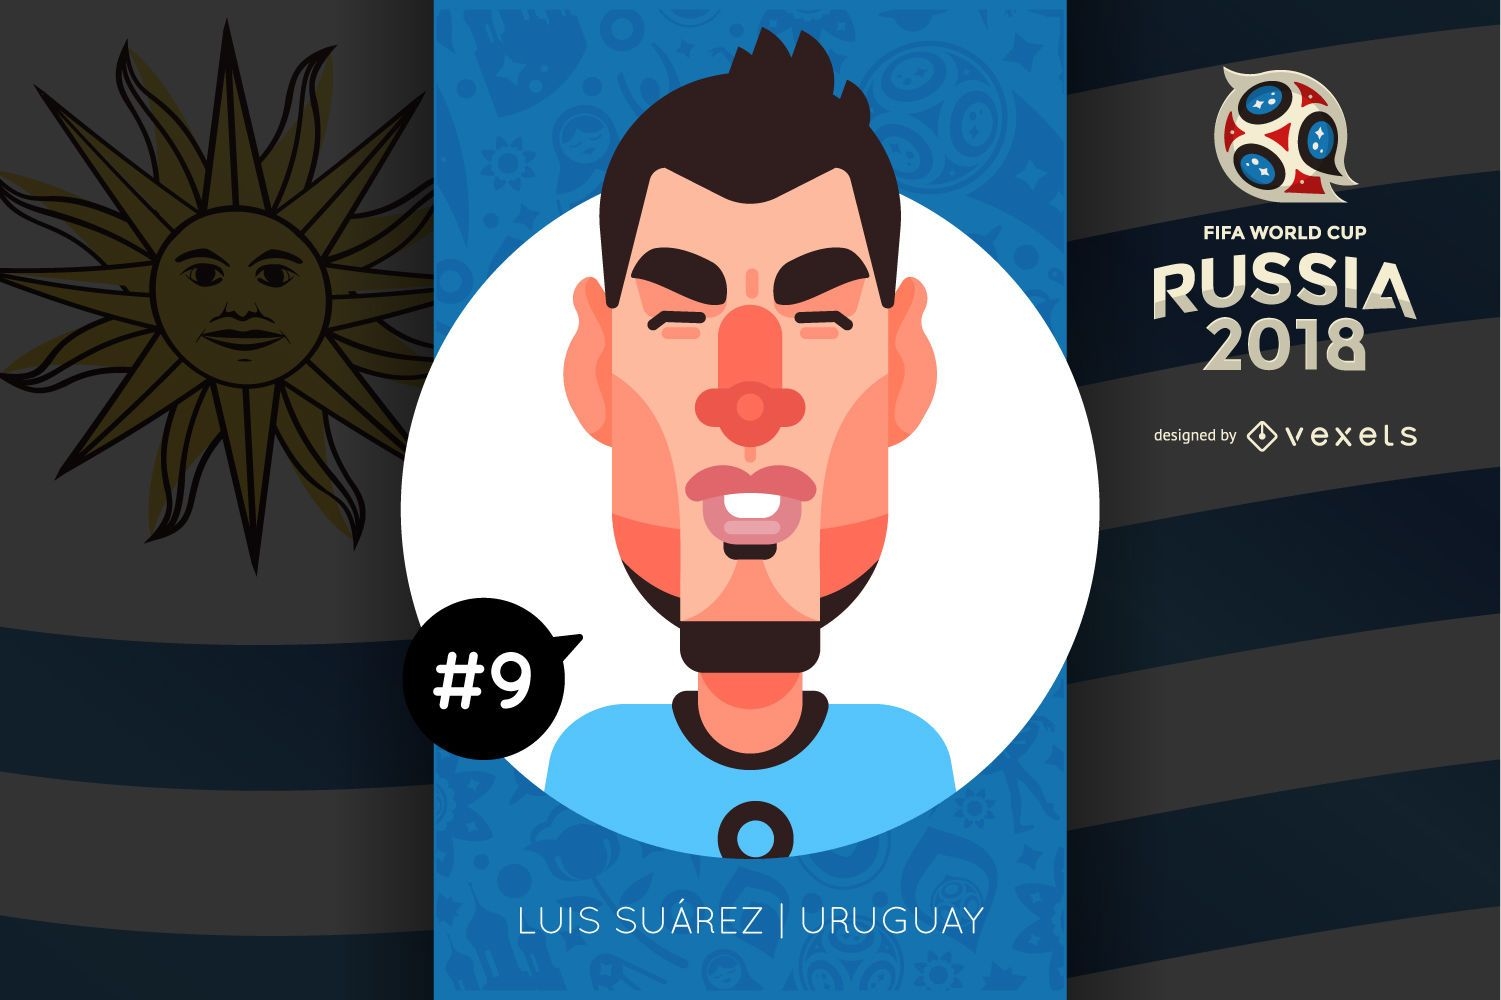 Luis Suarez Russia 2018 cartoon character